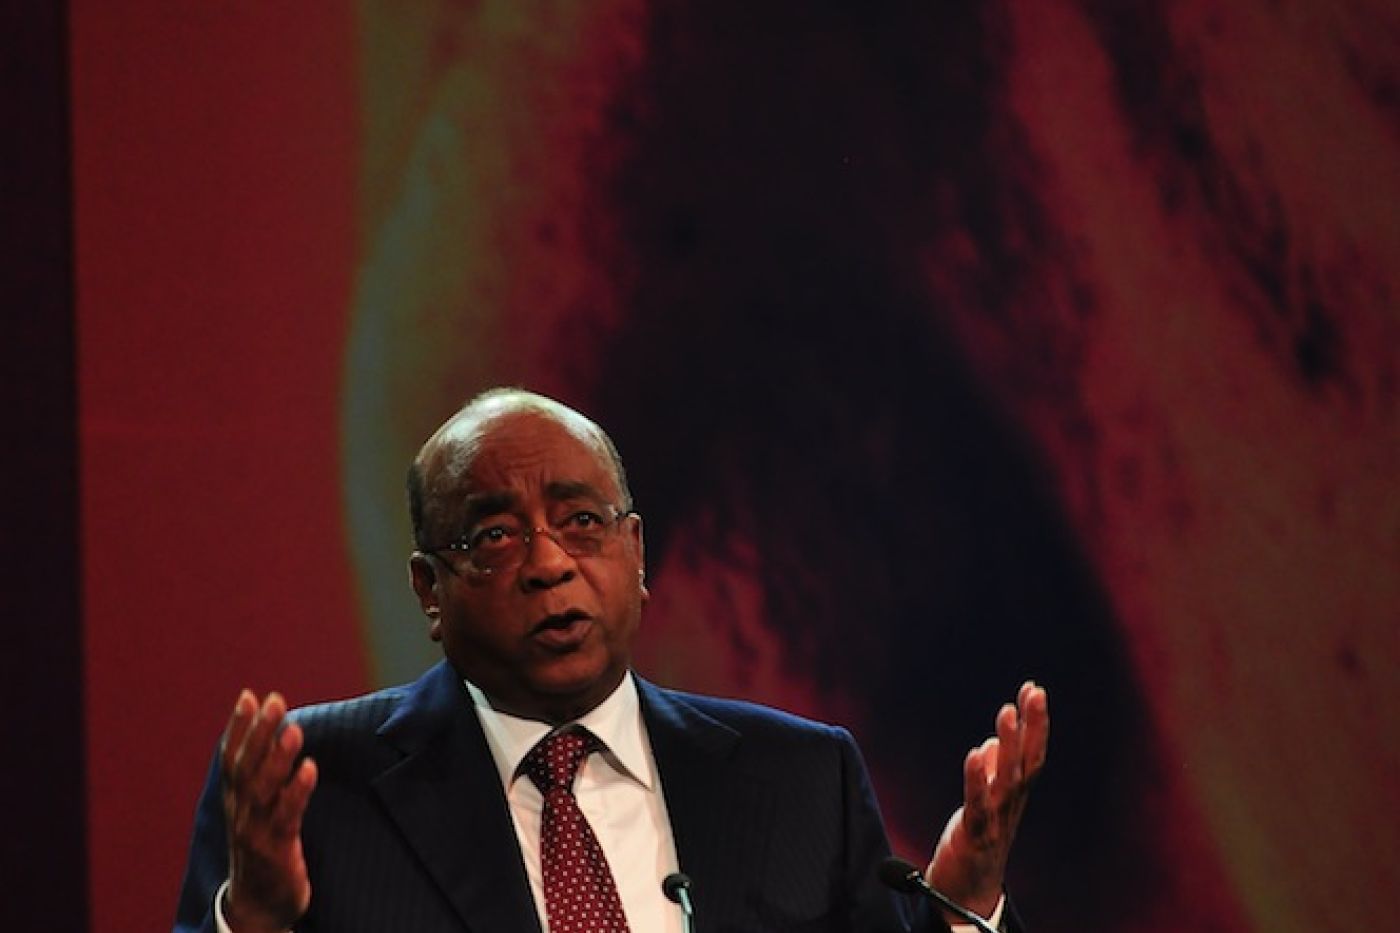 Mo Ibrahim, 11th Nelson Mandela Annual Lecture (g)